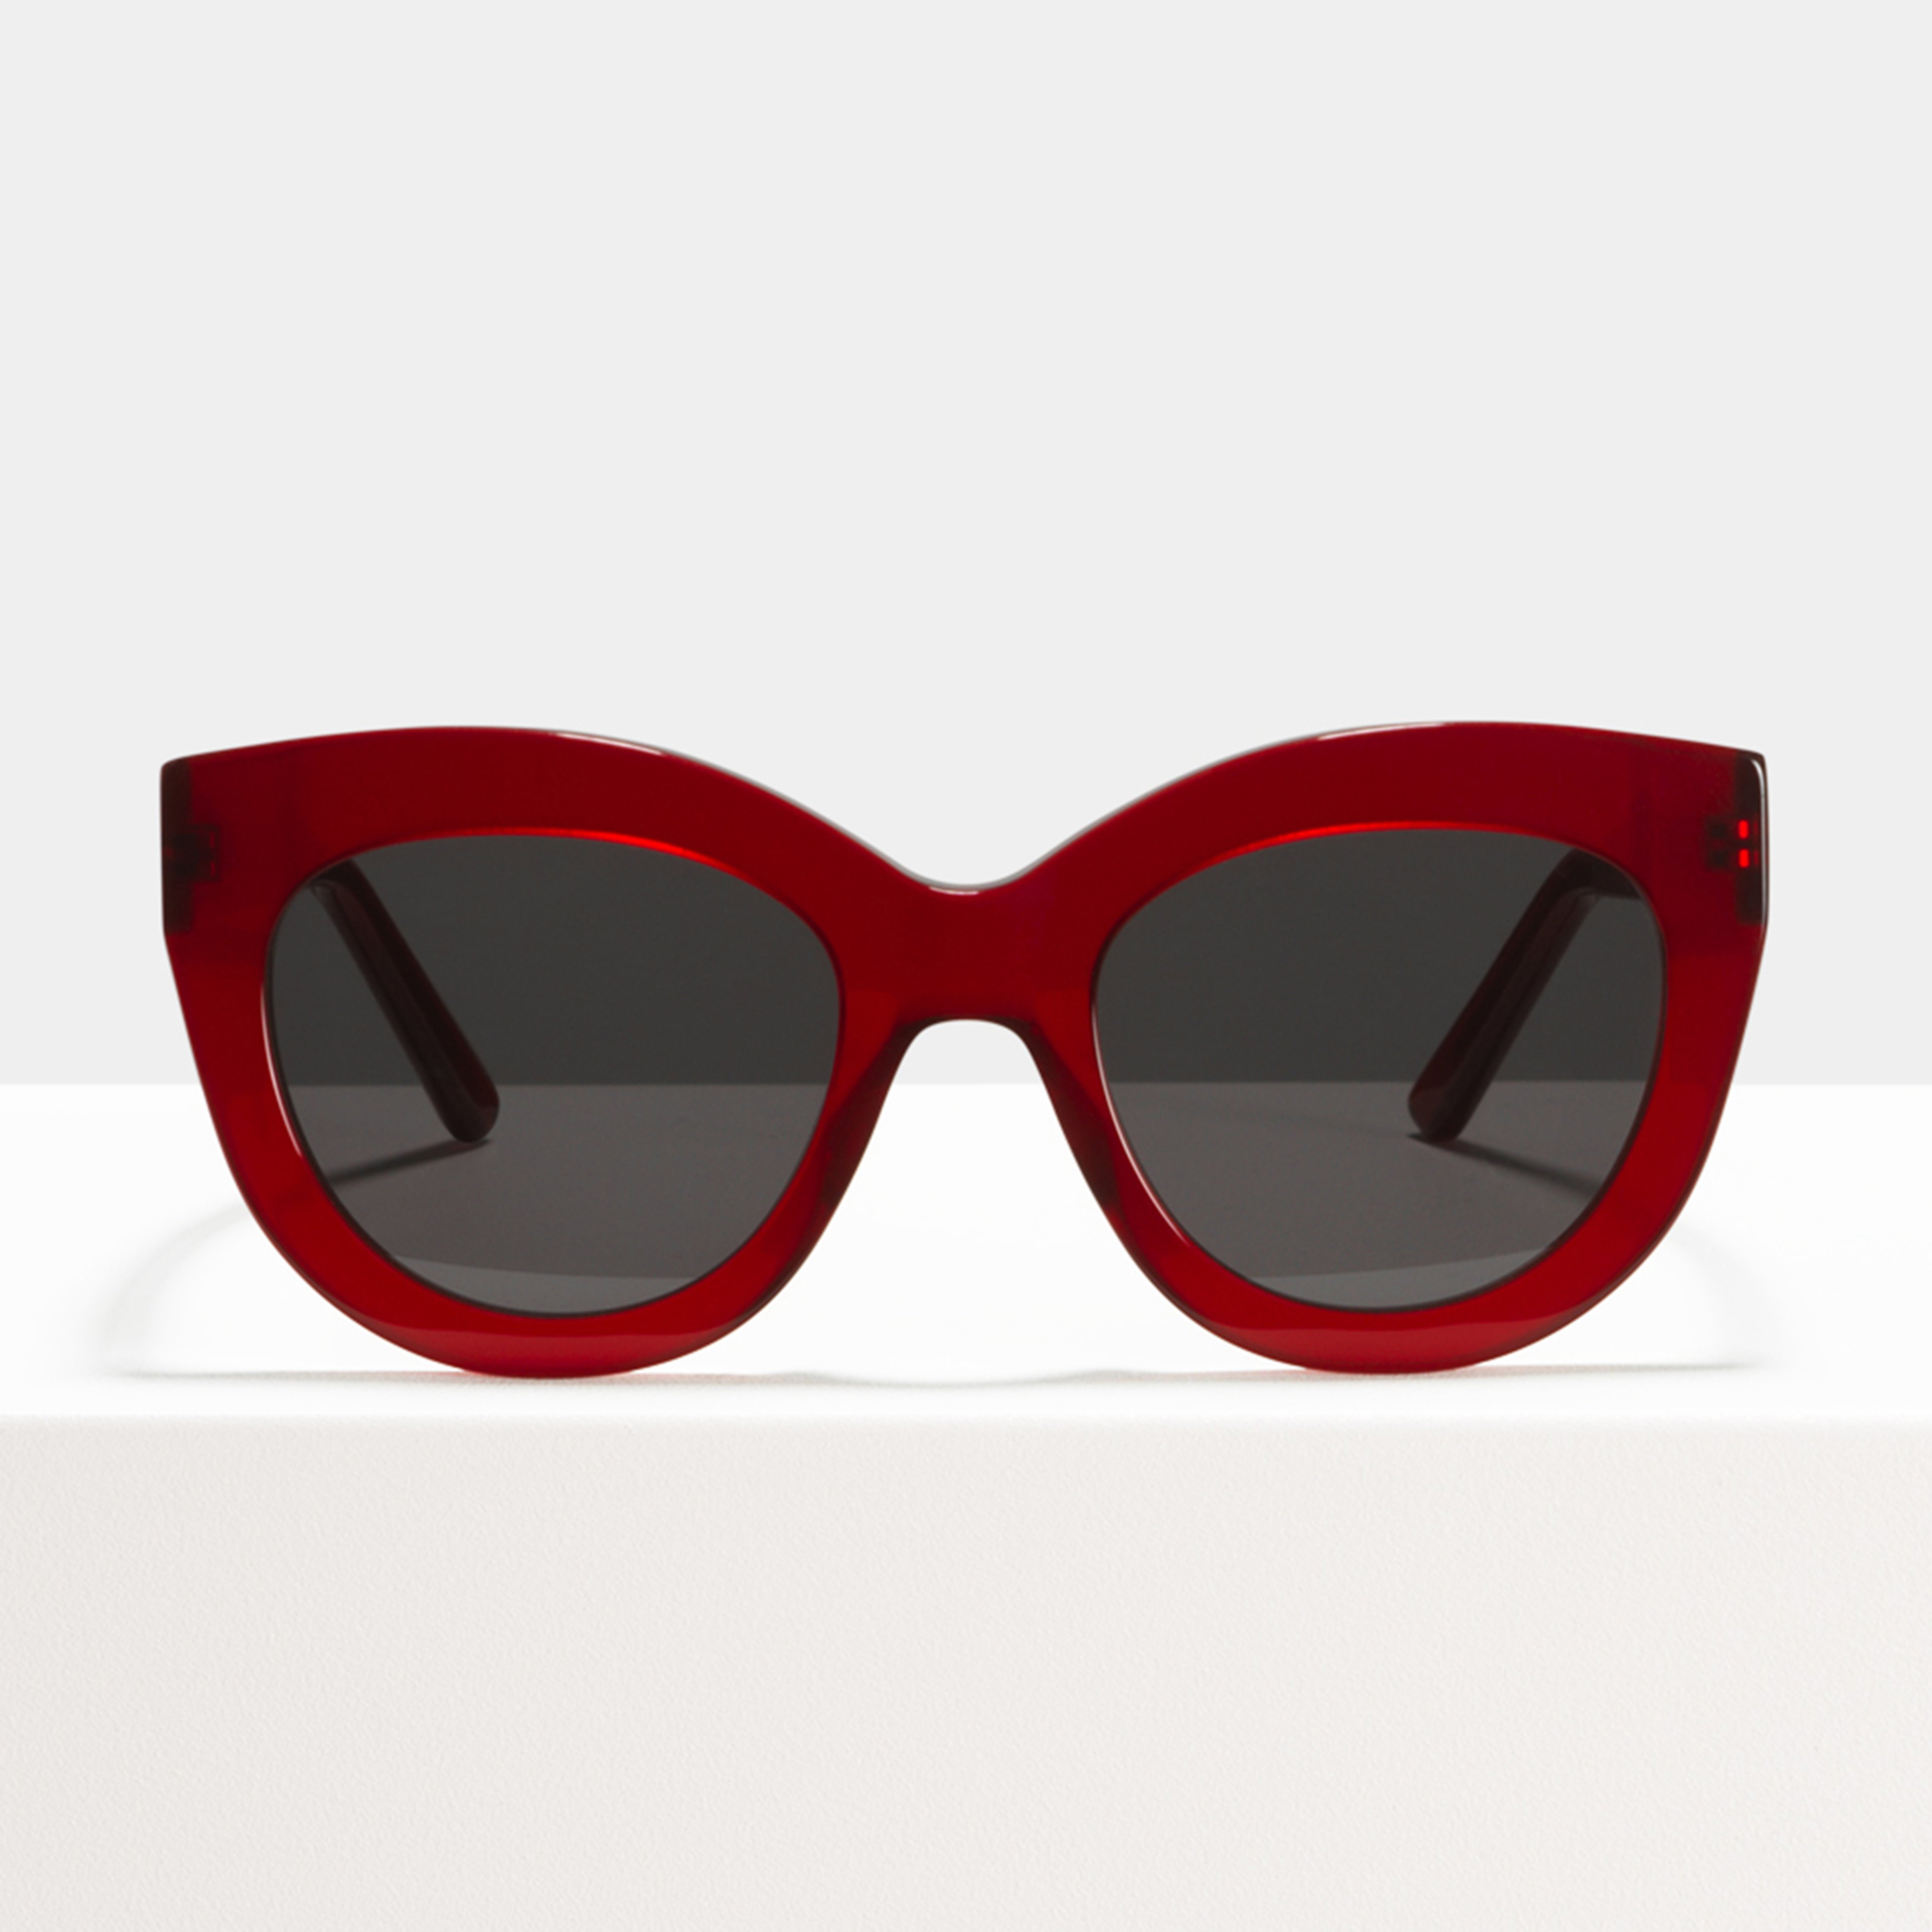 Ace & Tate Sonnenbrillen |  Acetat in Rot